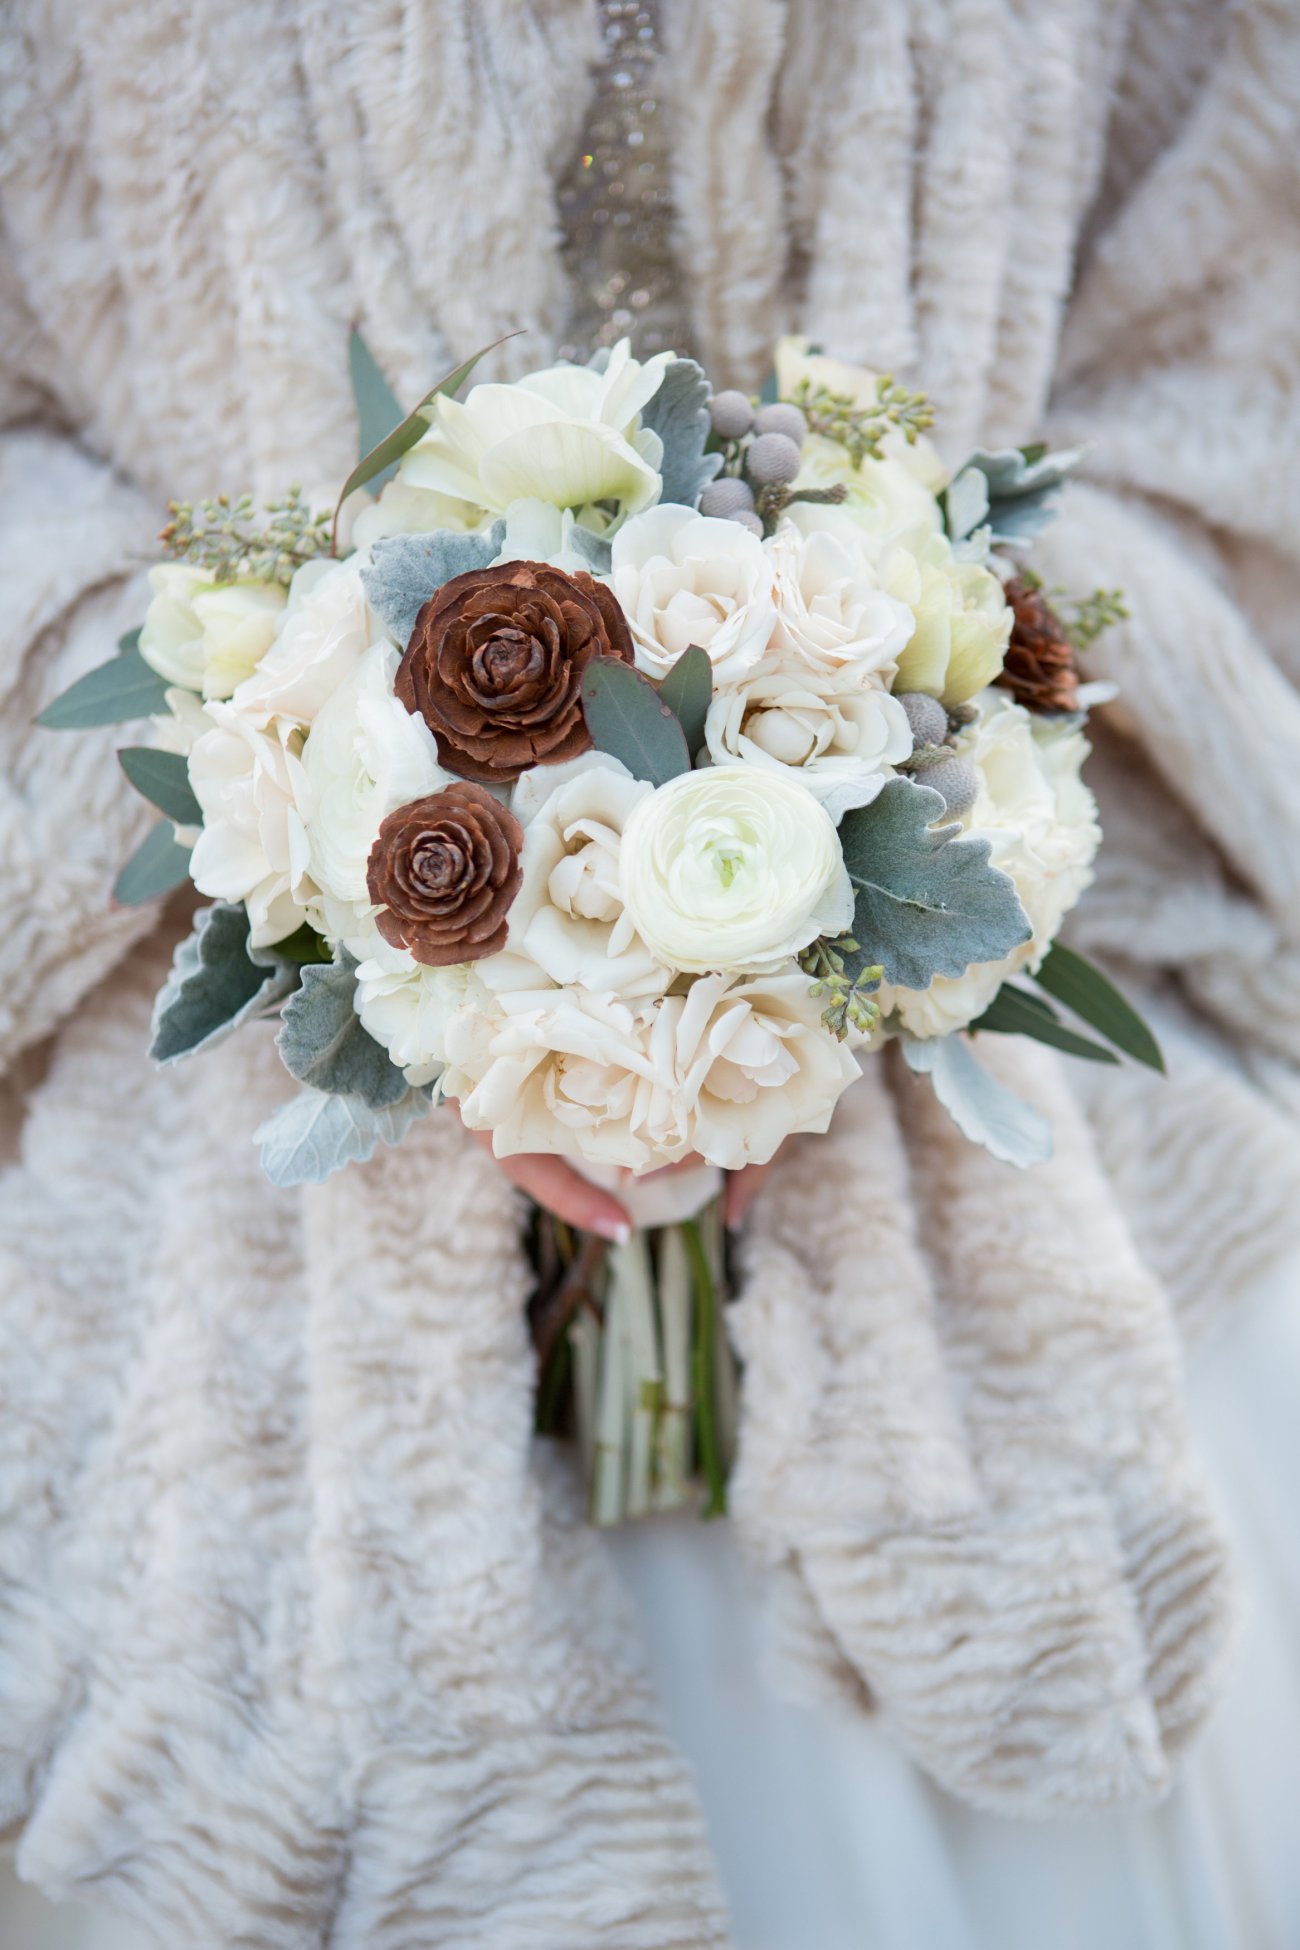 Pinecones in a bridal bouquet.